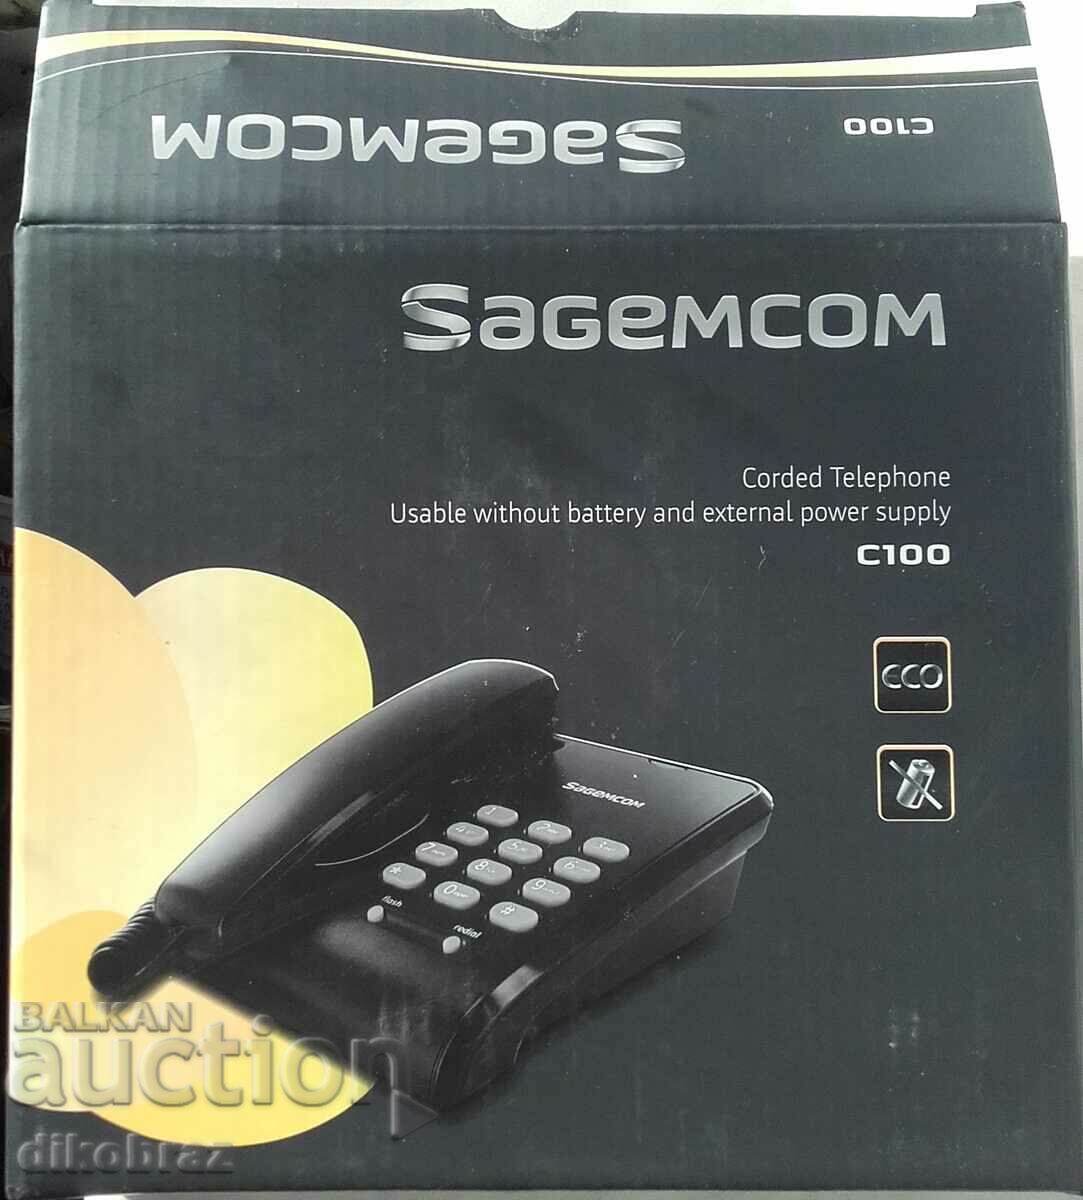 Sagem C100 landline phone - New in original box